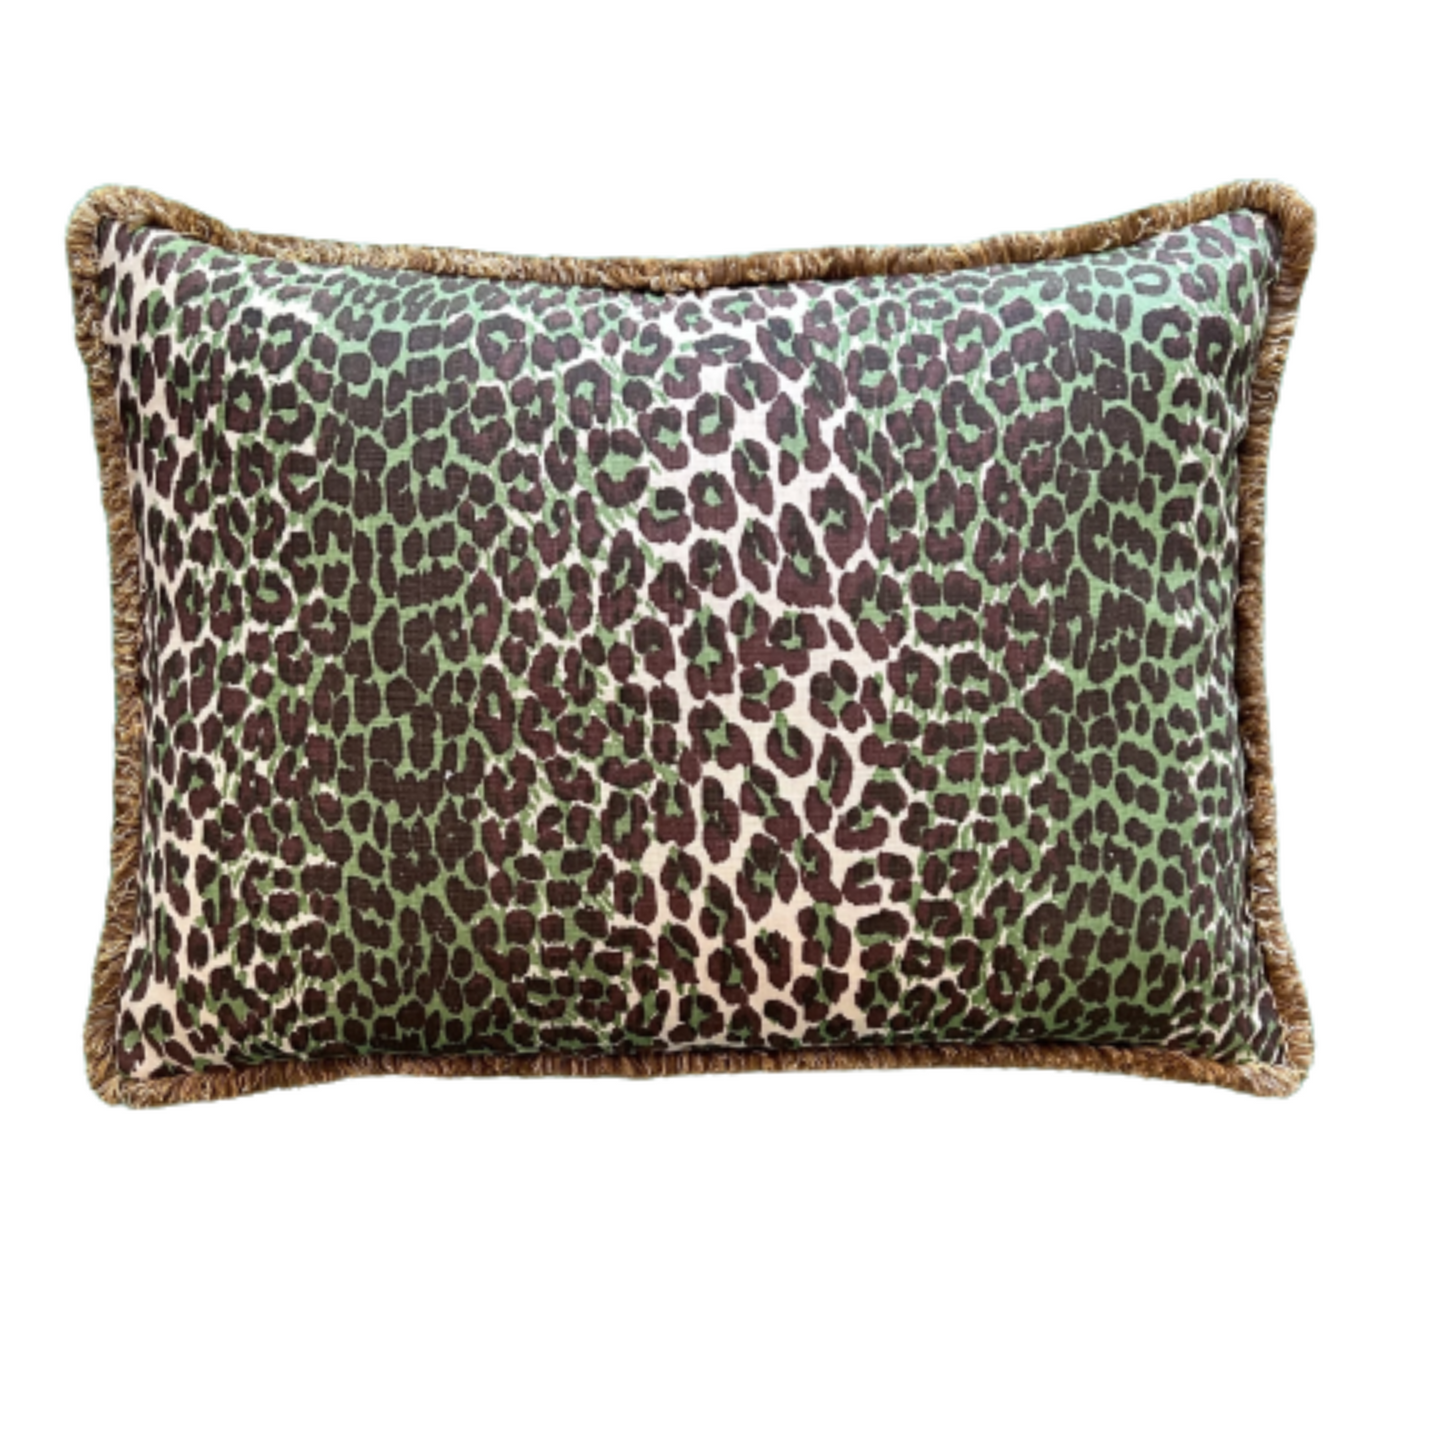 Safari Green Leopard Lumbar 16 x 20 Decorative Pillow with Down/Feather Insert